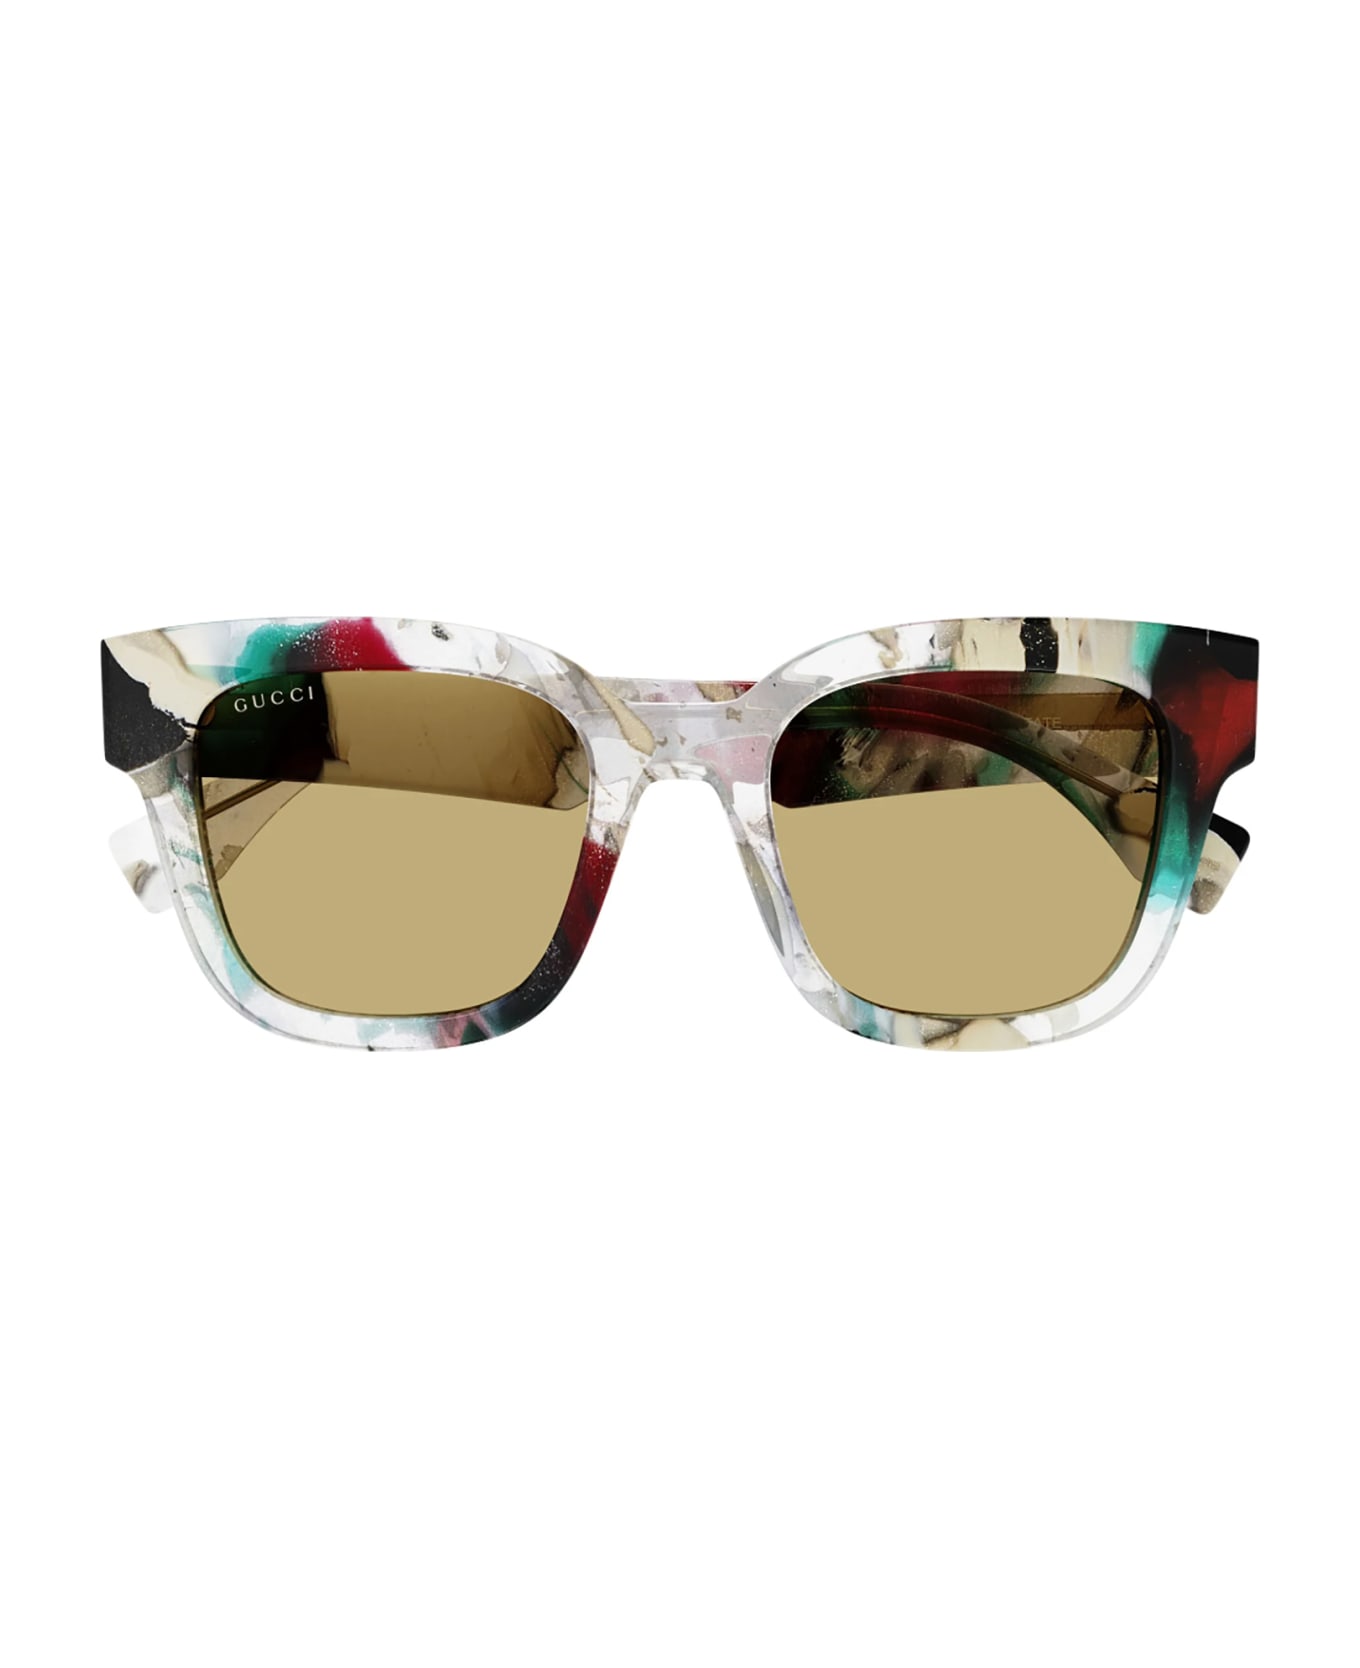 Gucci Eyewear GG1624S Sunglasses - Multicolor Multicolor サングラス